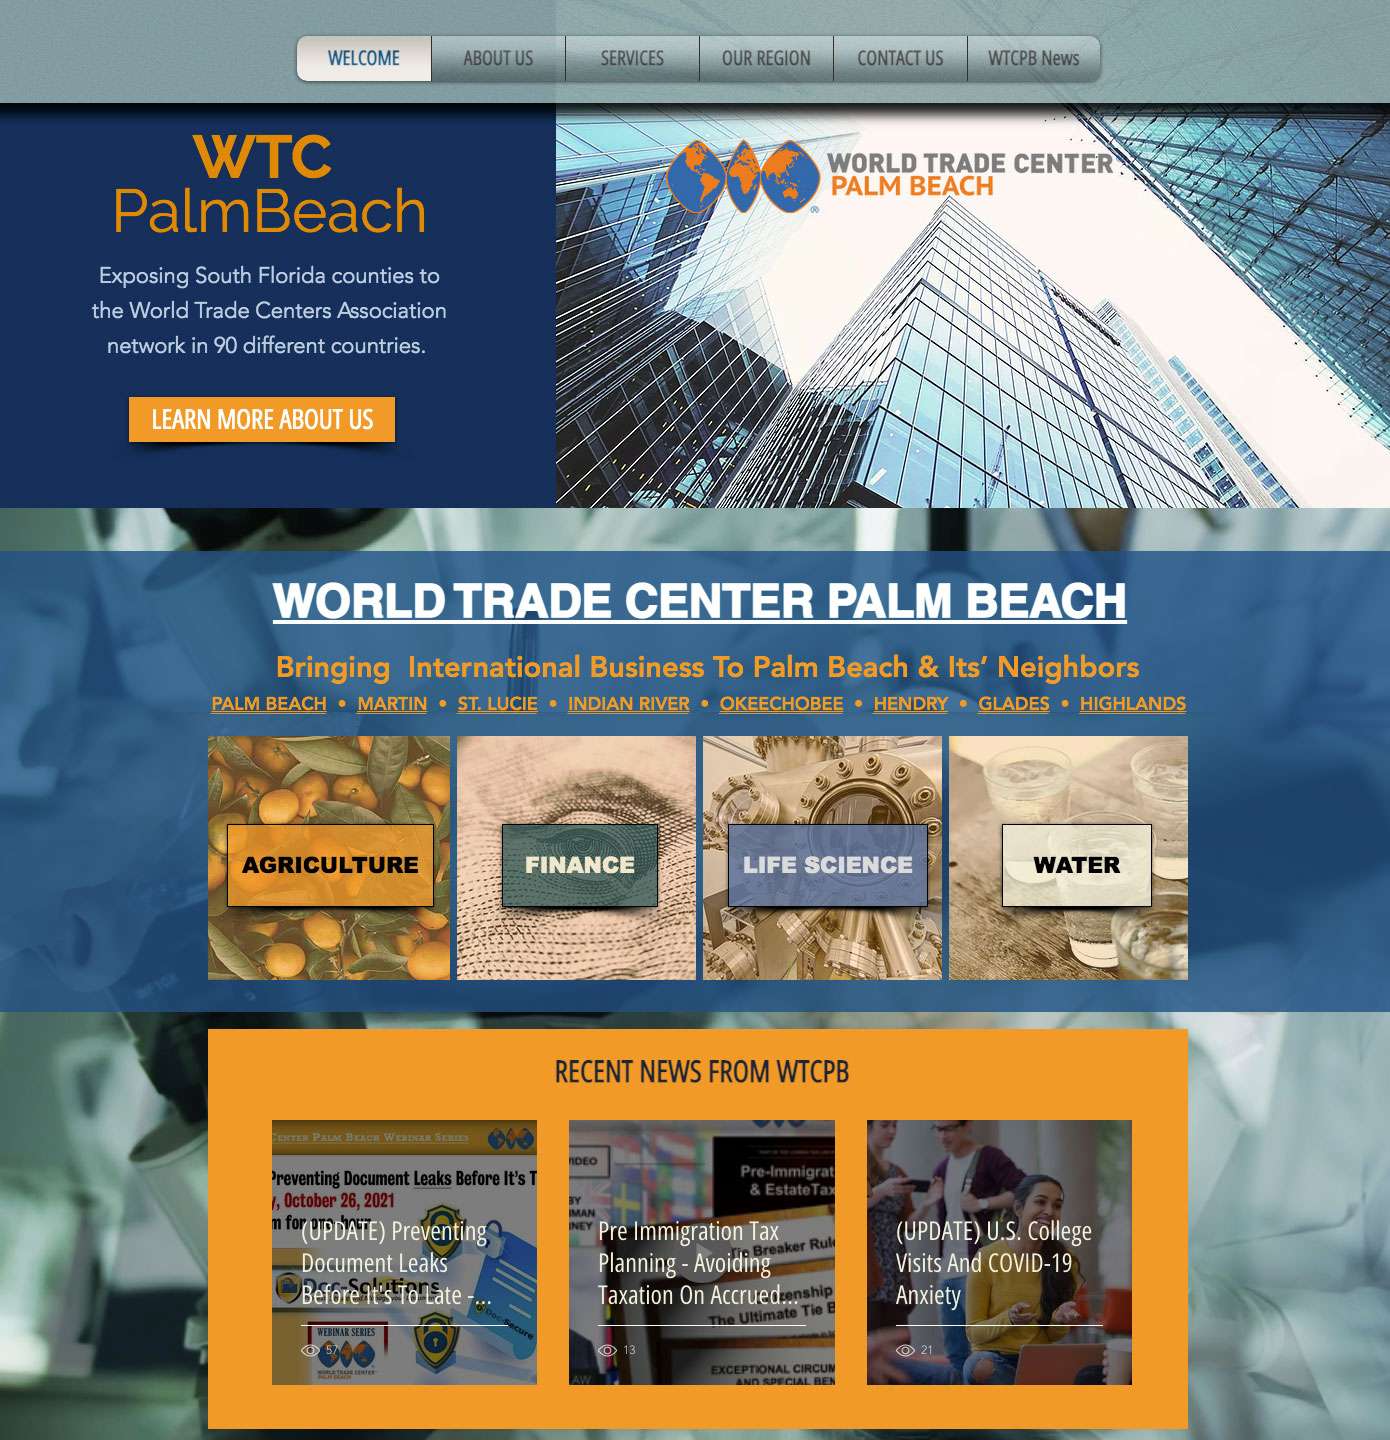 World Trade Center Palm Beach